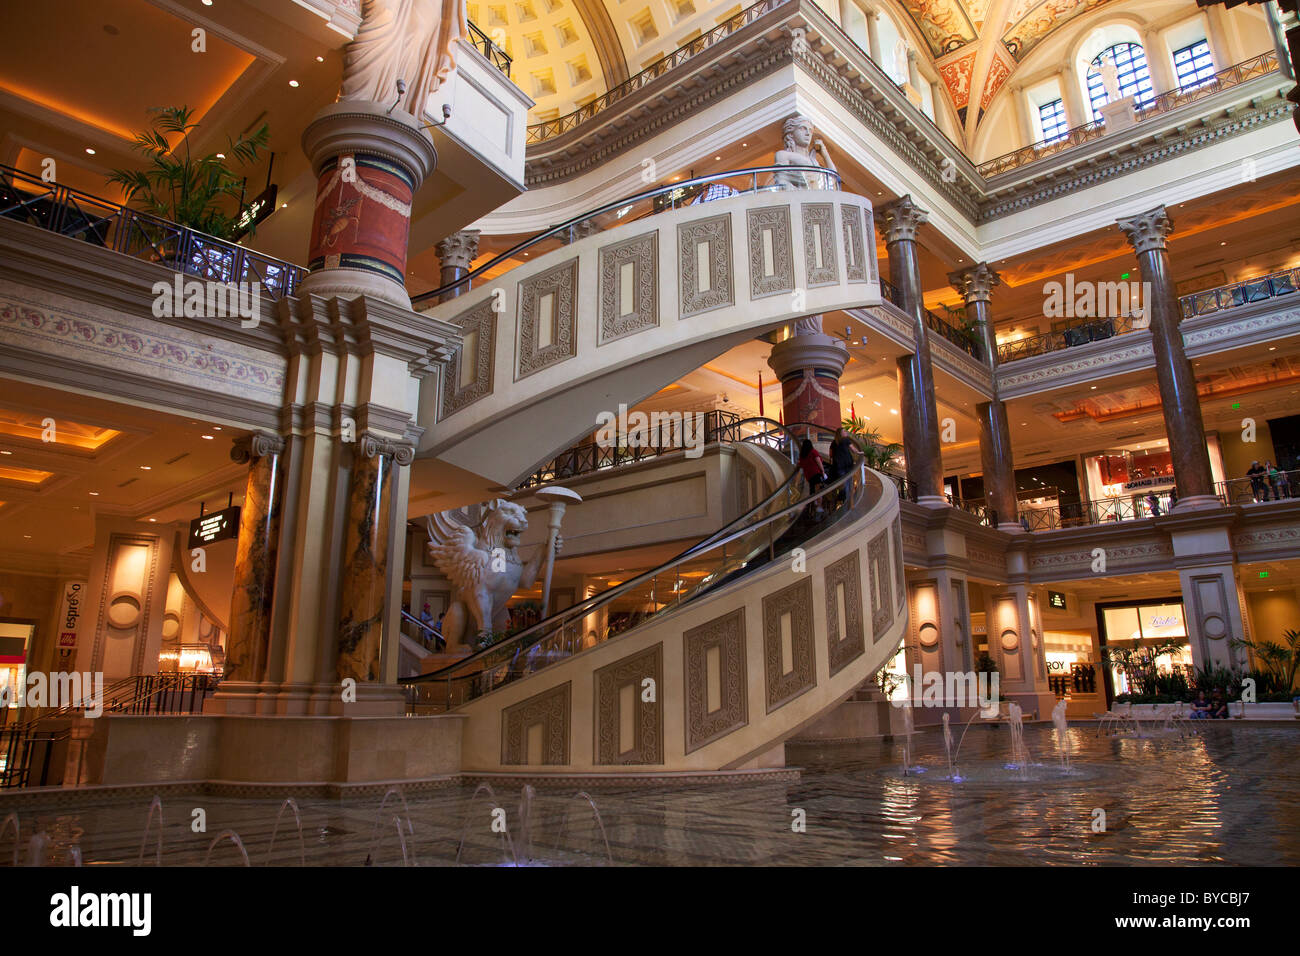 Inside The Forum Shops Luxury Shopping Mall at Caesars Palace, Las Vegas  Stock Photo - Alamy